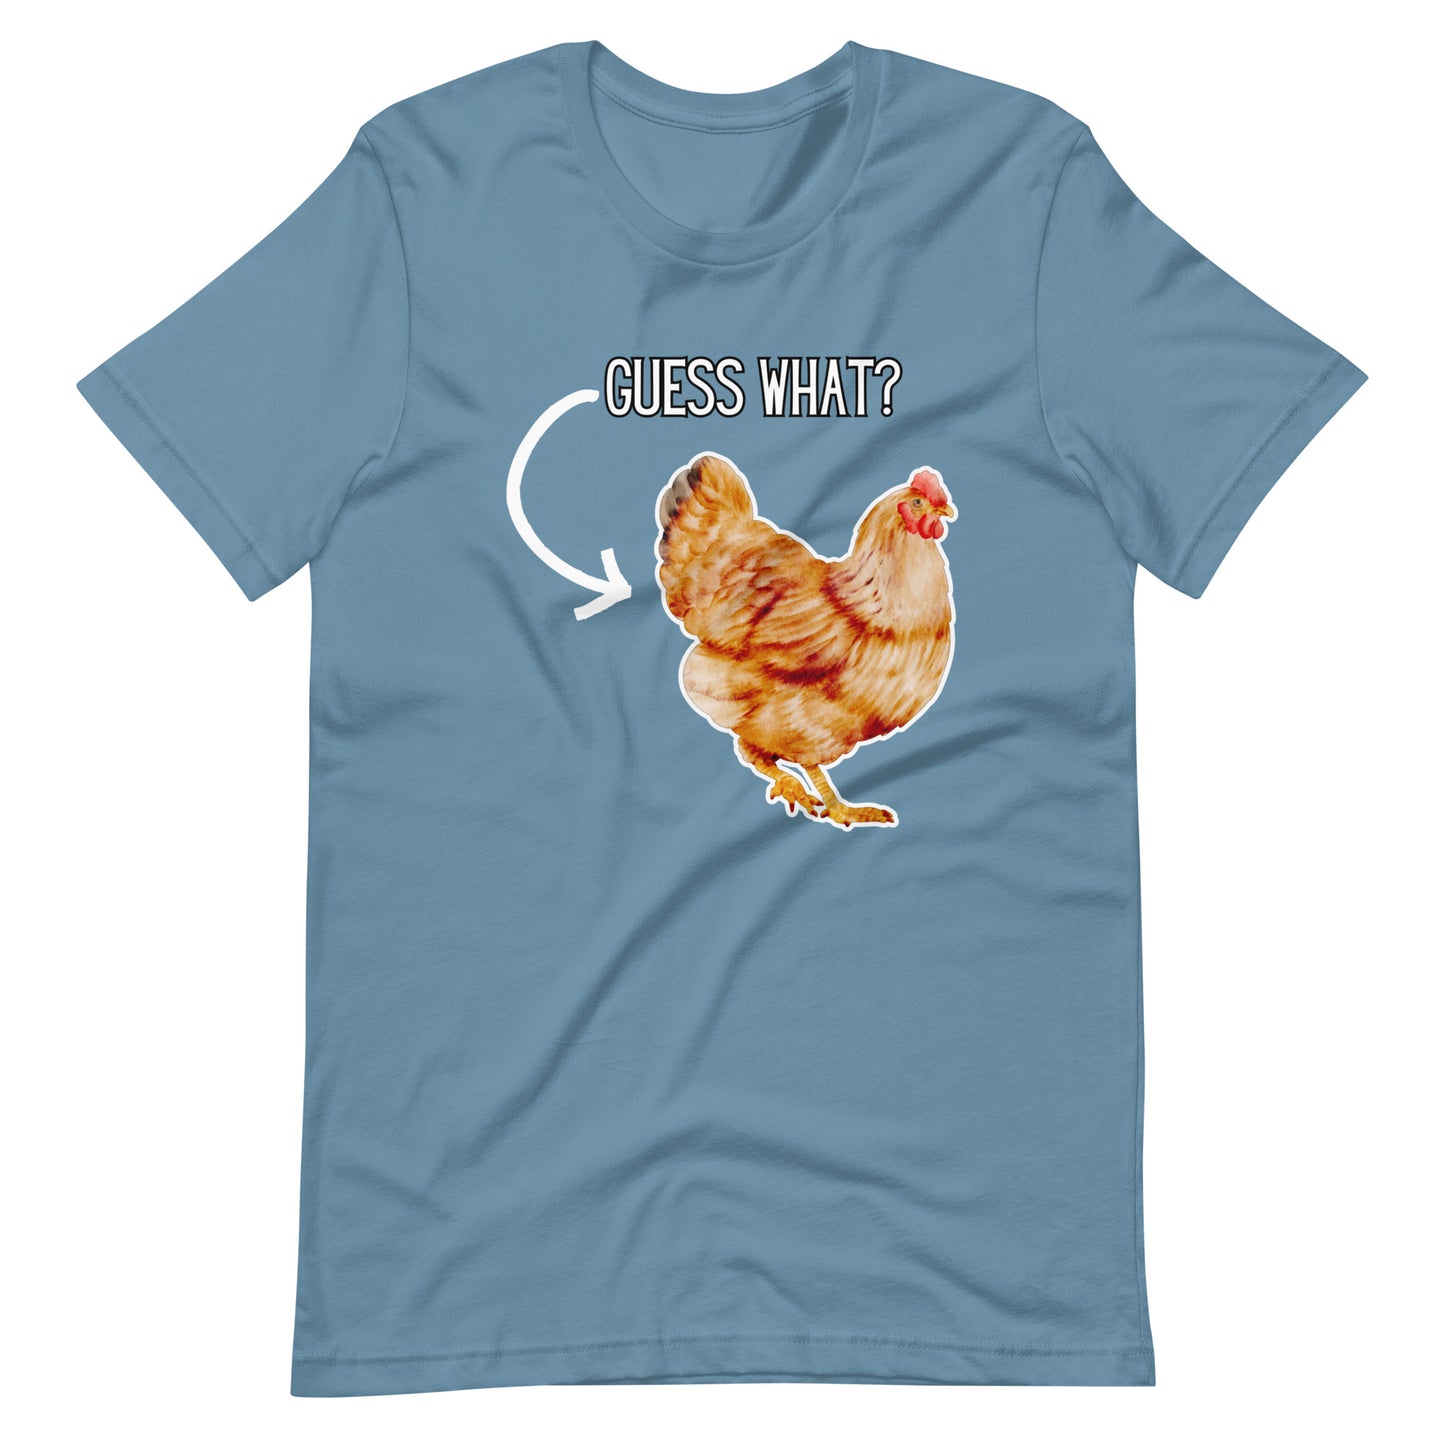 Guess What? Chicken Butt! Funny t-shirt